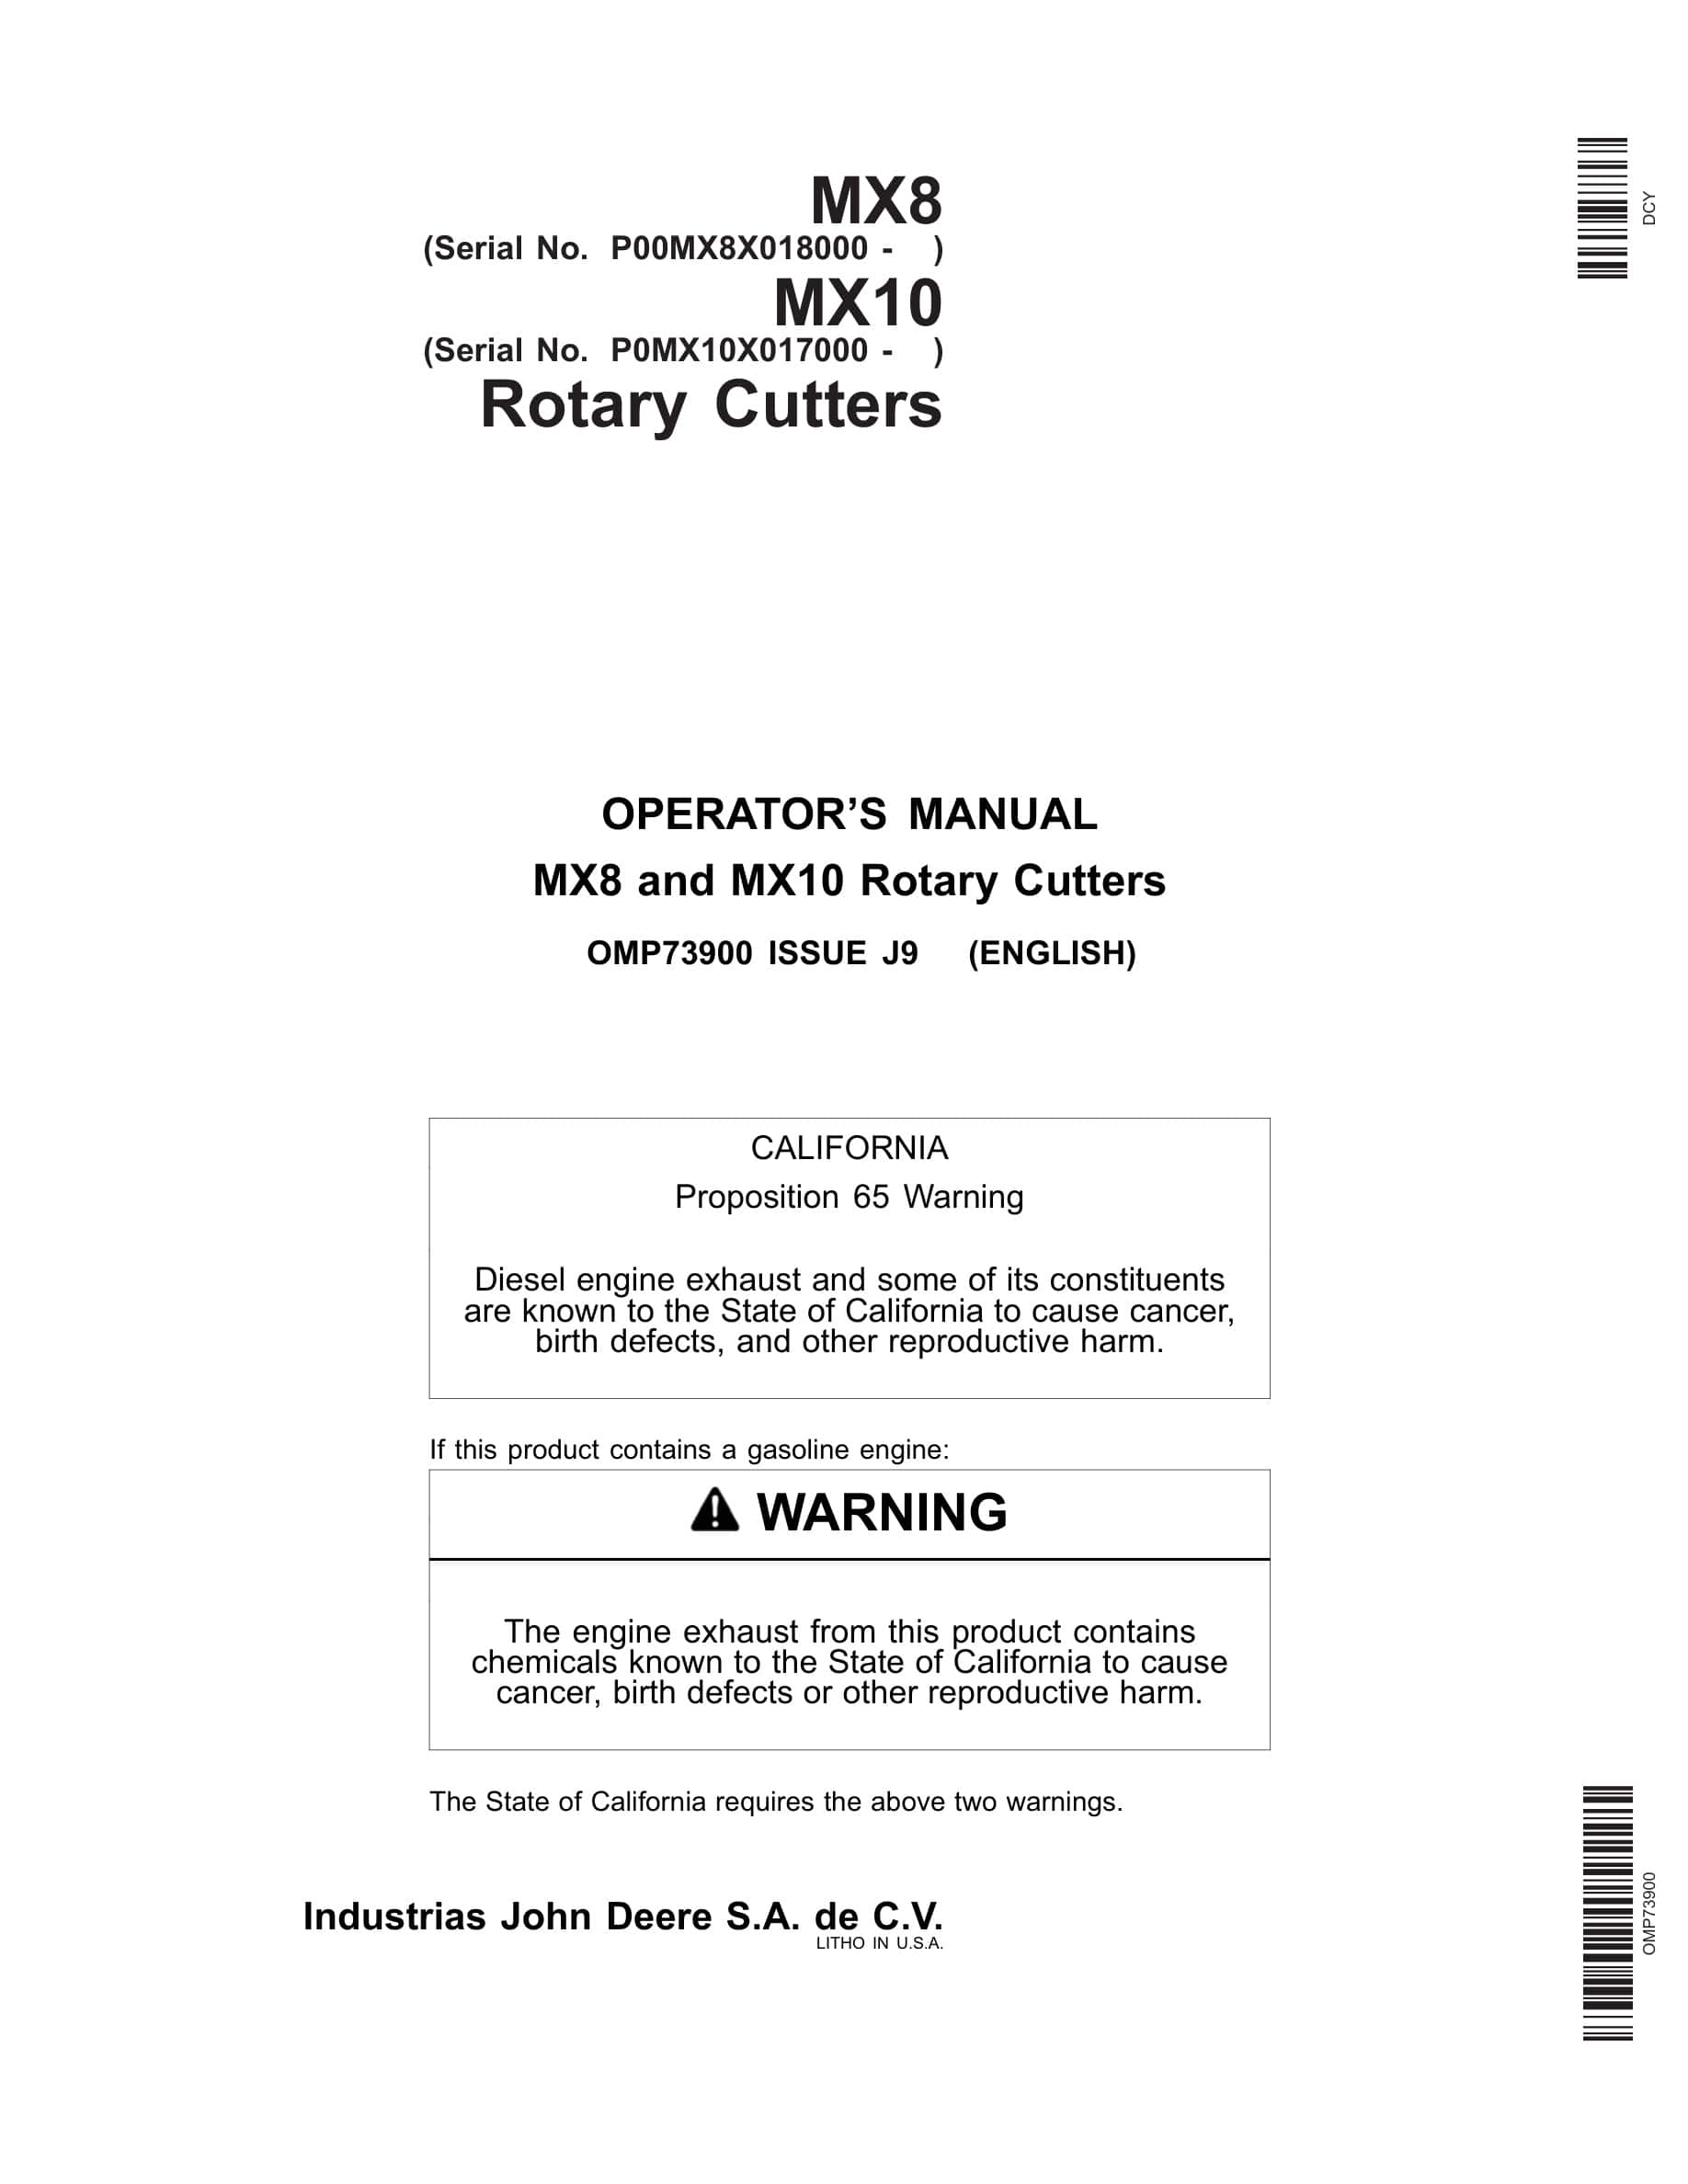 John Deere MX8 and MX10 Rotary Cutter Operator Manual OMP73900-1